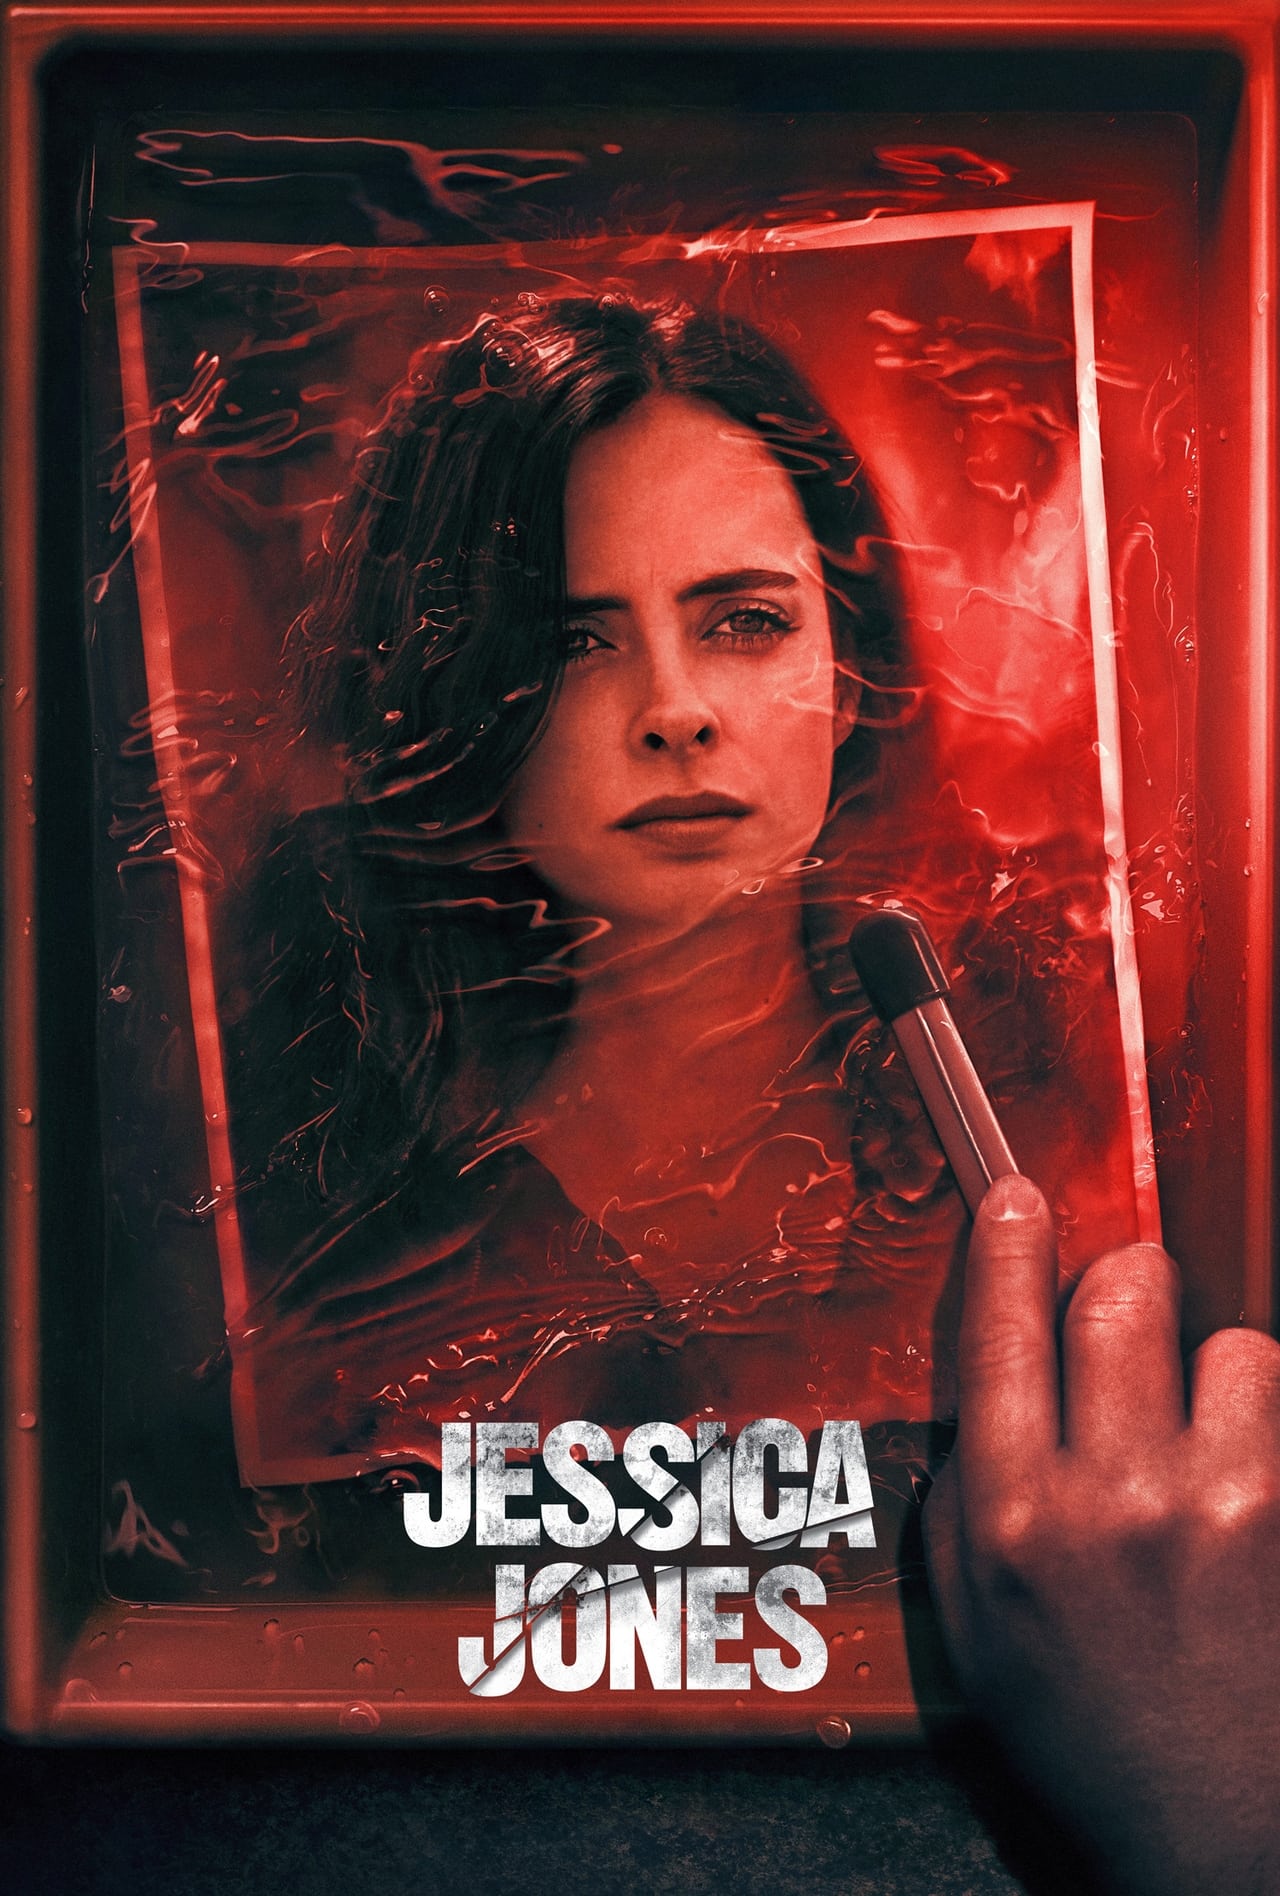 Jessica Jones (2018) S2 EP01&EP13 256Kbps 23.976Fps 48Khz 5.1Ch Disney+ DD+ E-AC3 Turkish Audio TAC